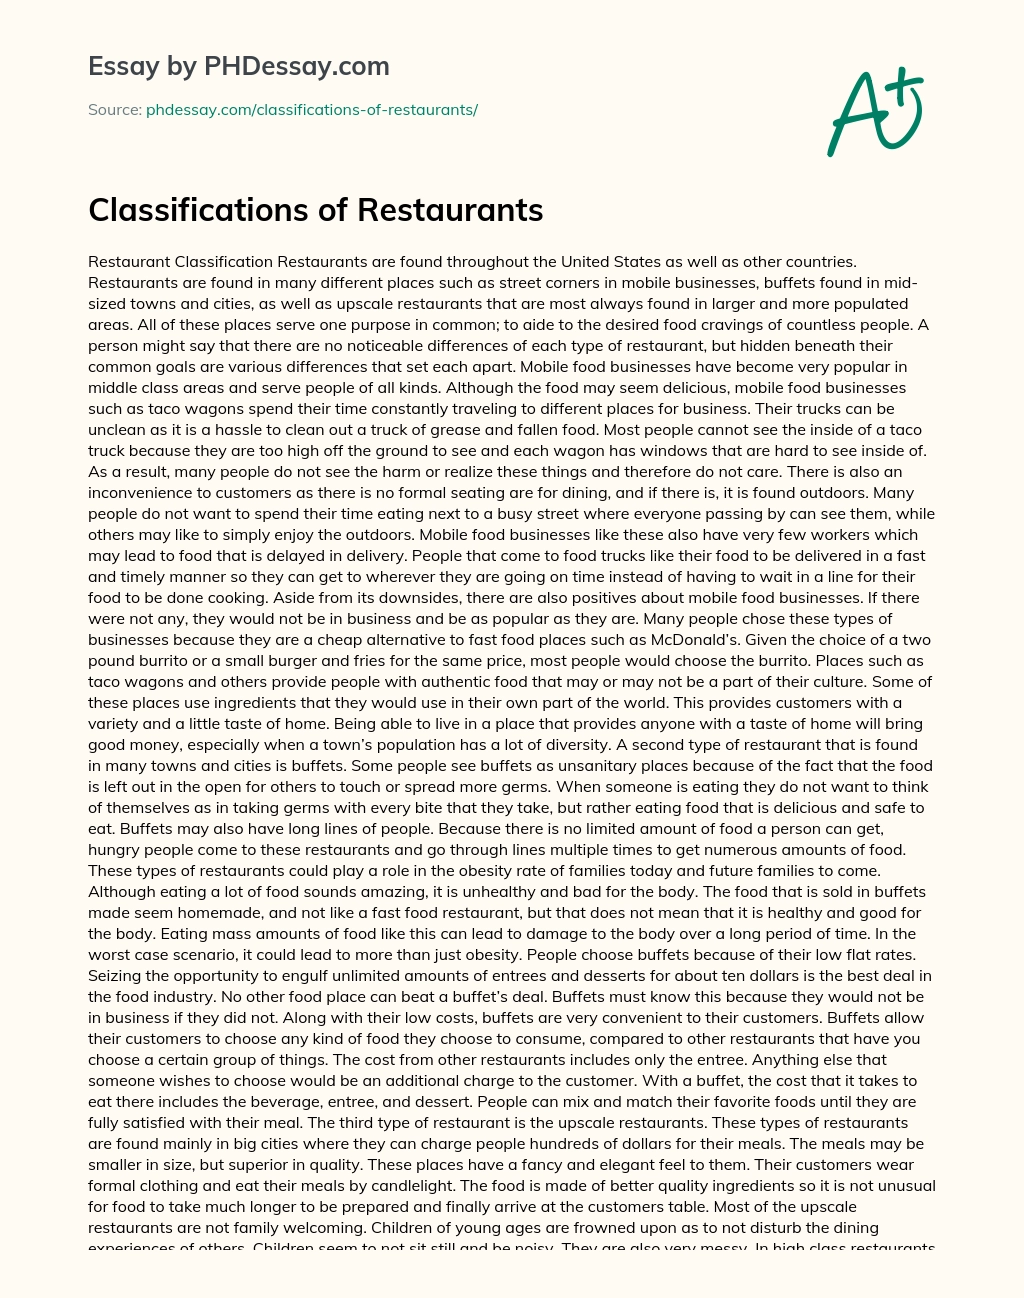 Classifications of Restaurants essay